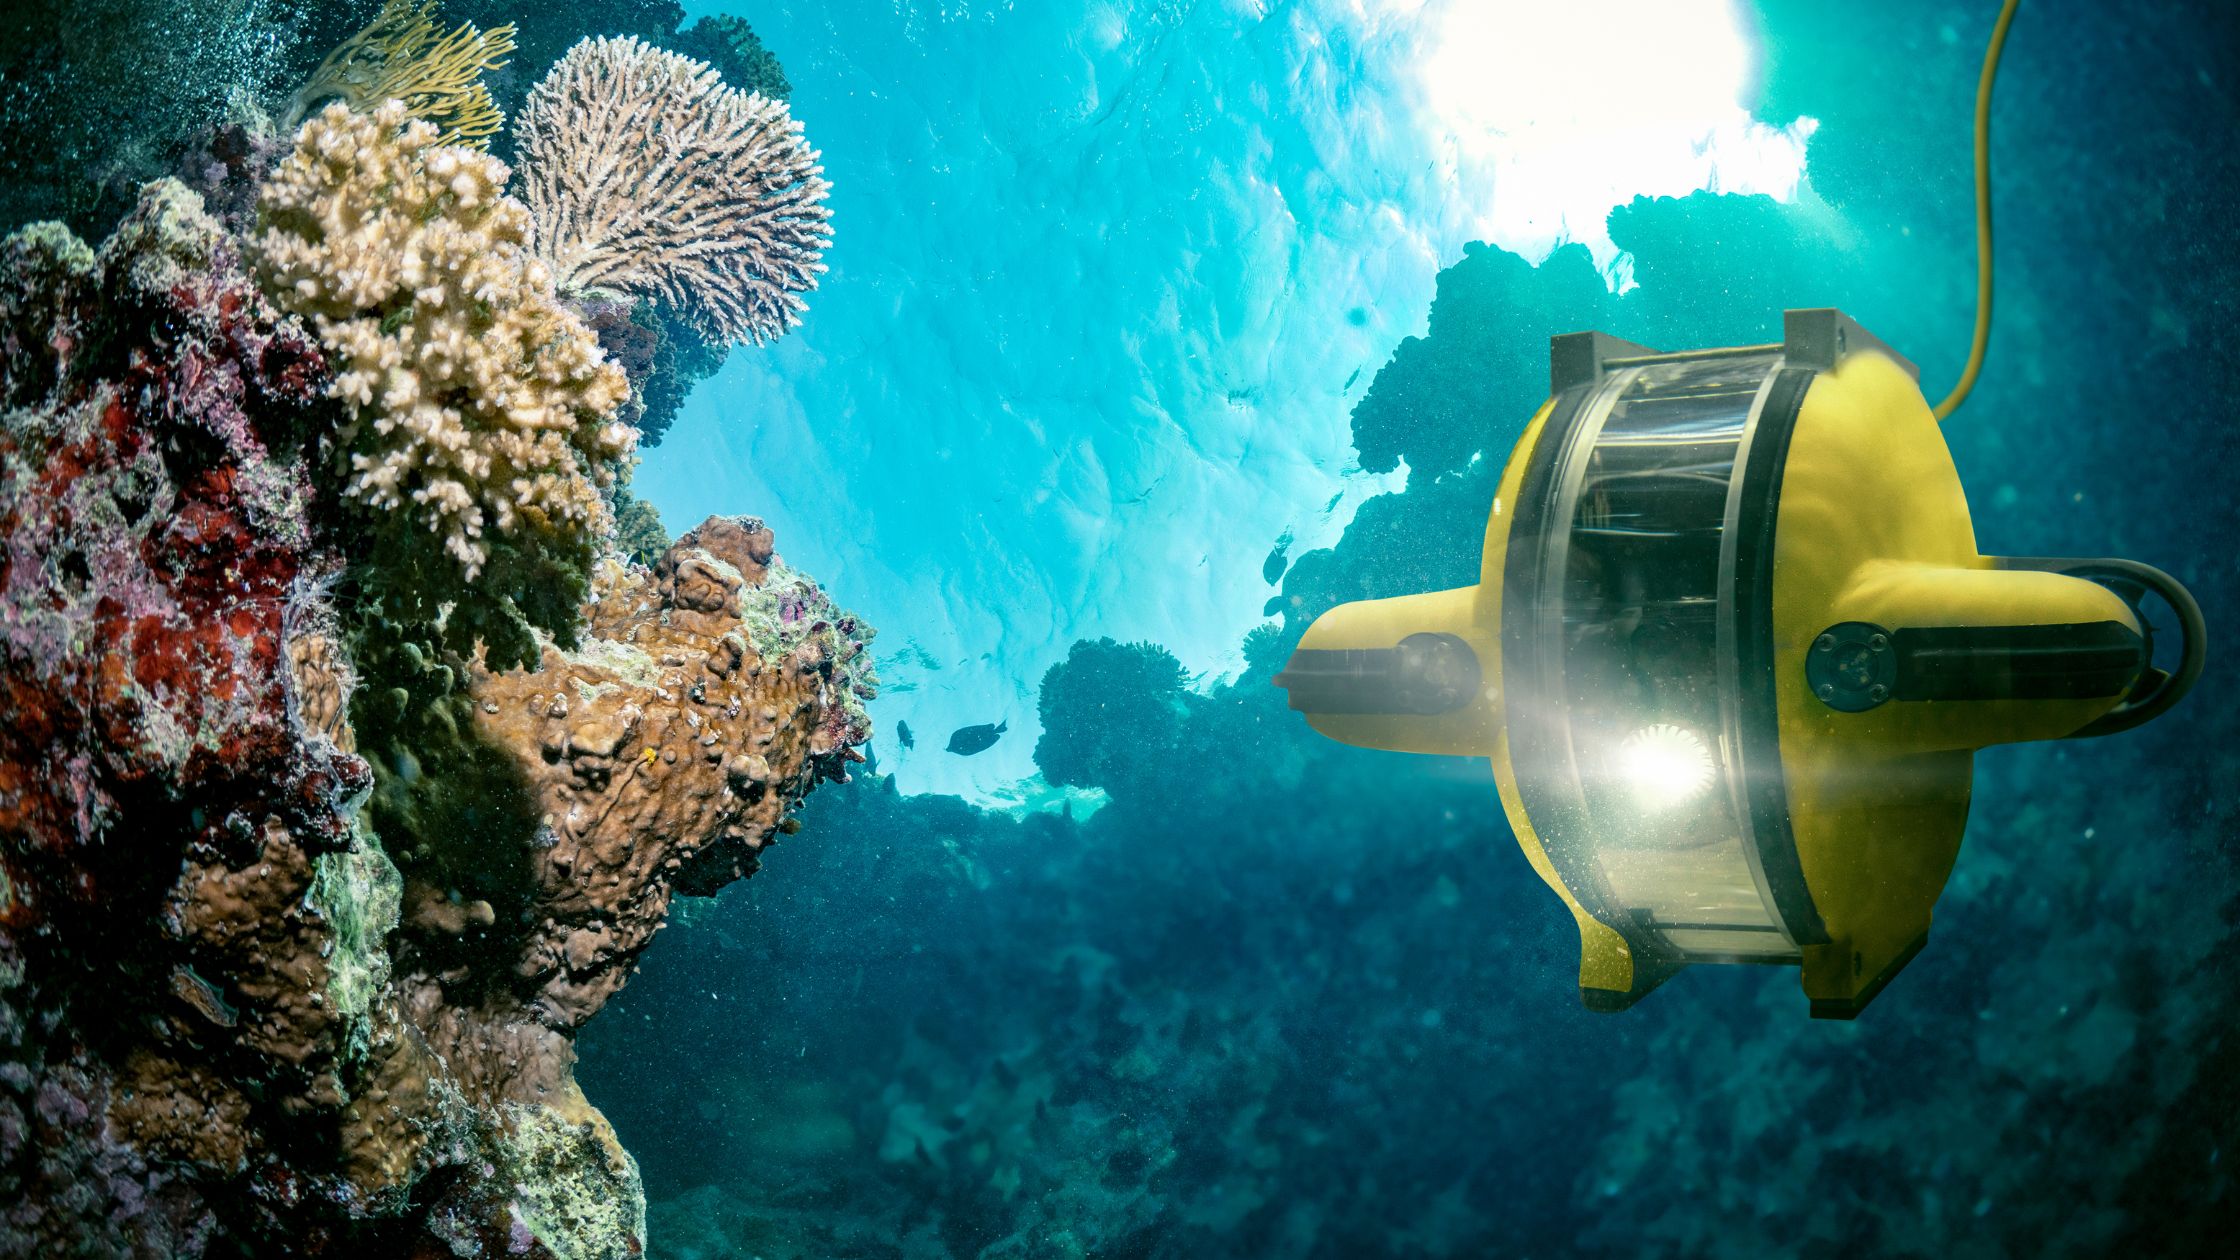 The Technology Behind Deep Sea Exploration